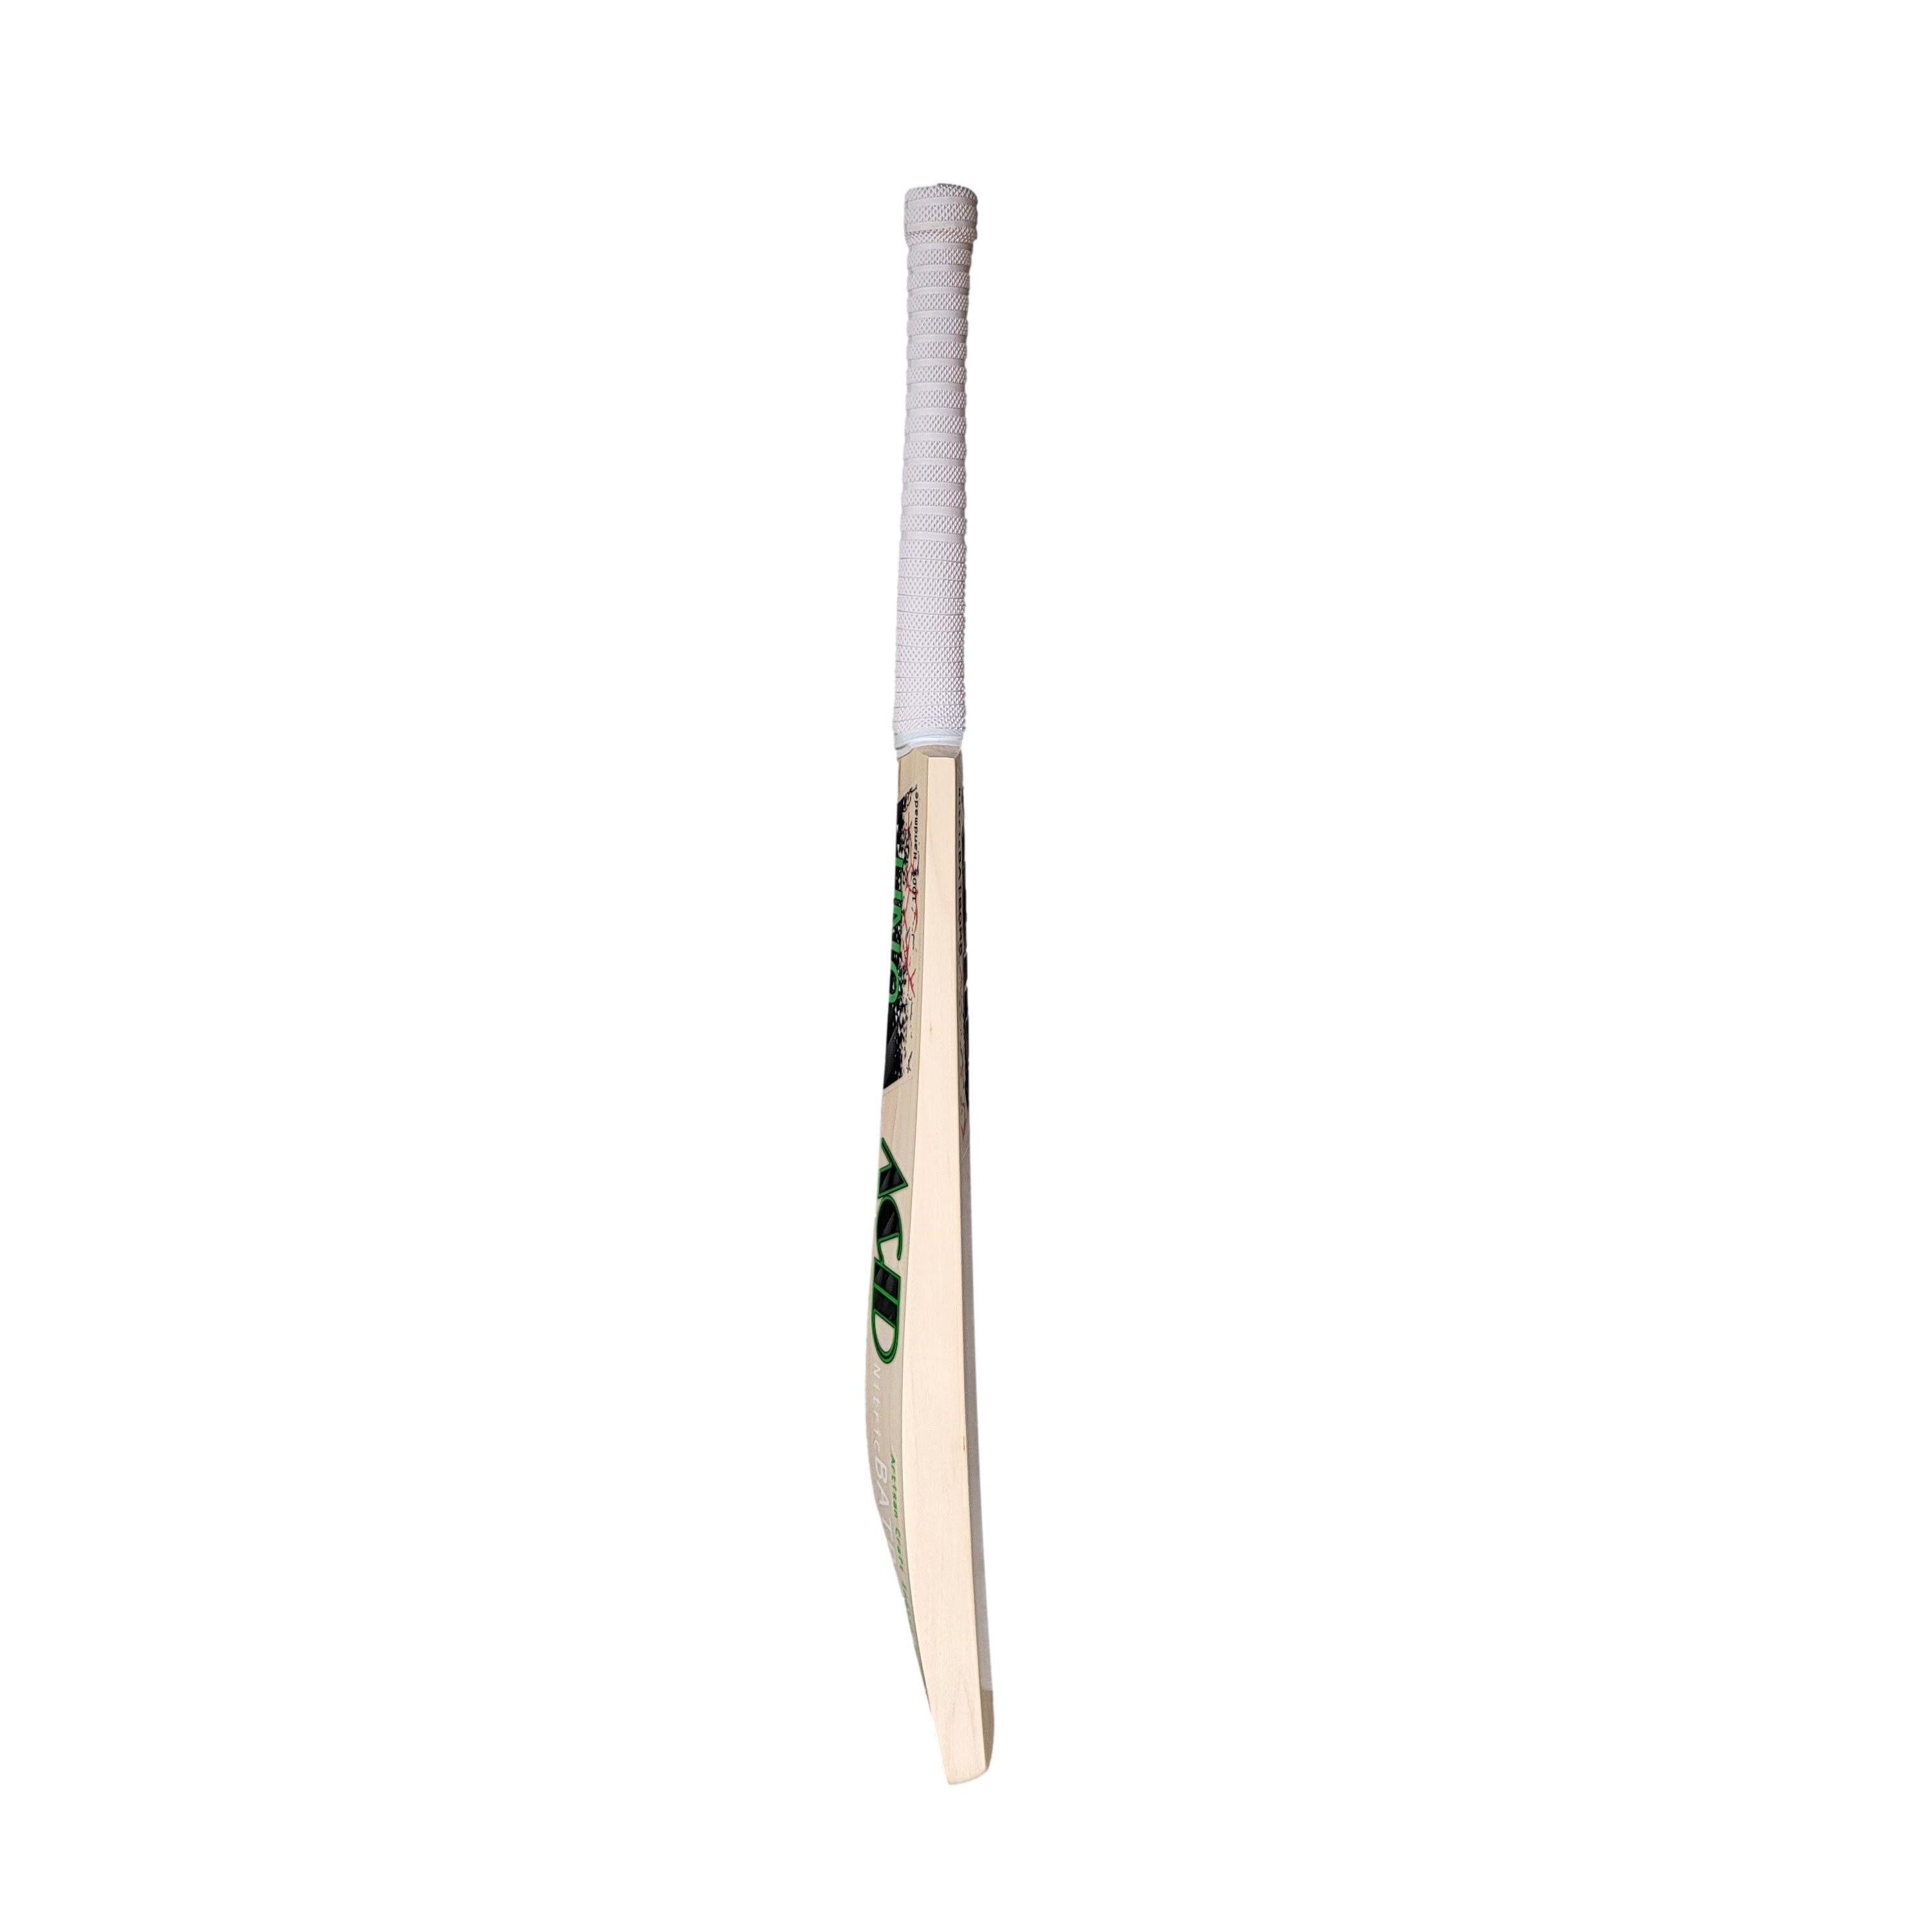 ACID Nitric Grade 2 Cricket Bat - The Cricket Store